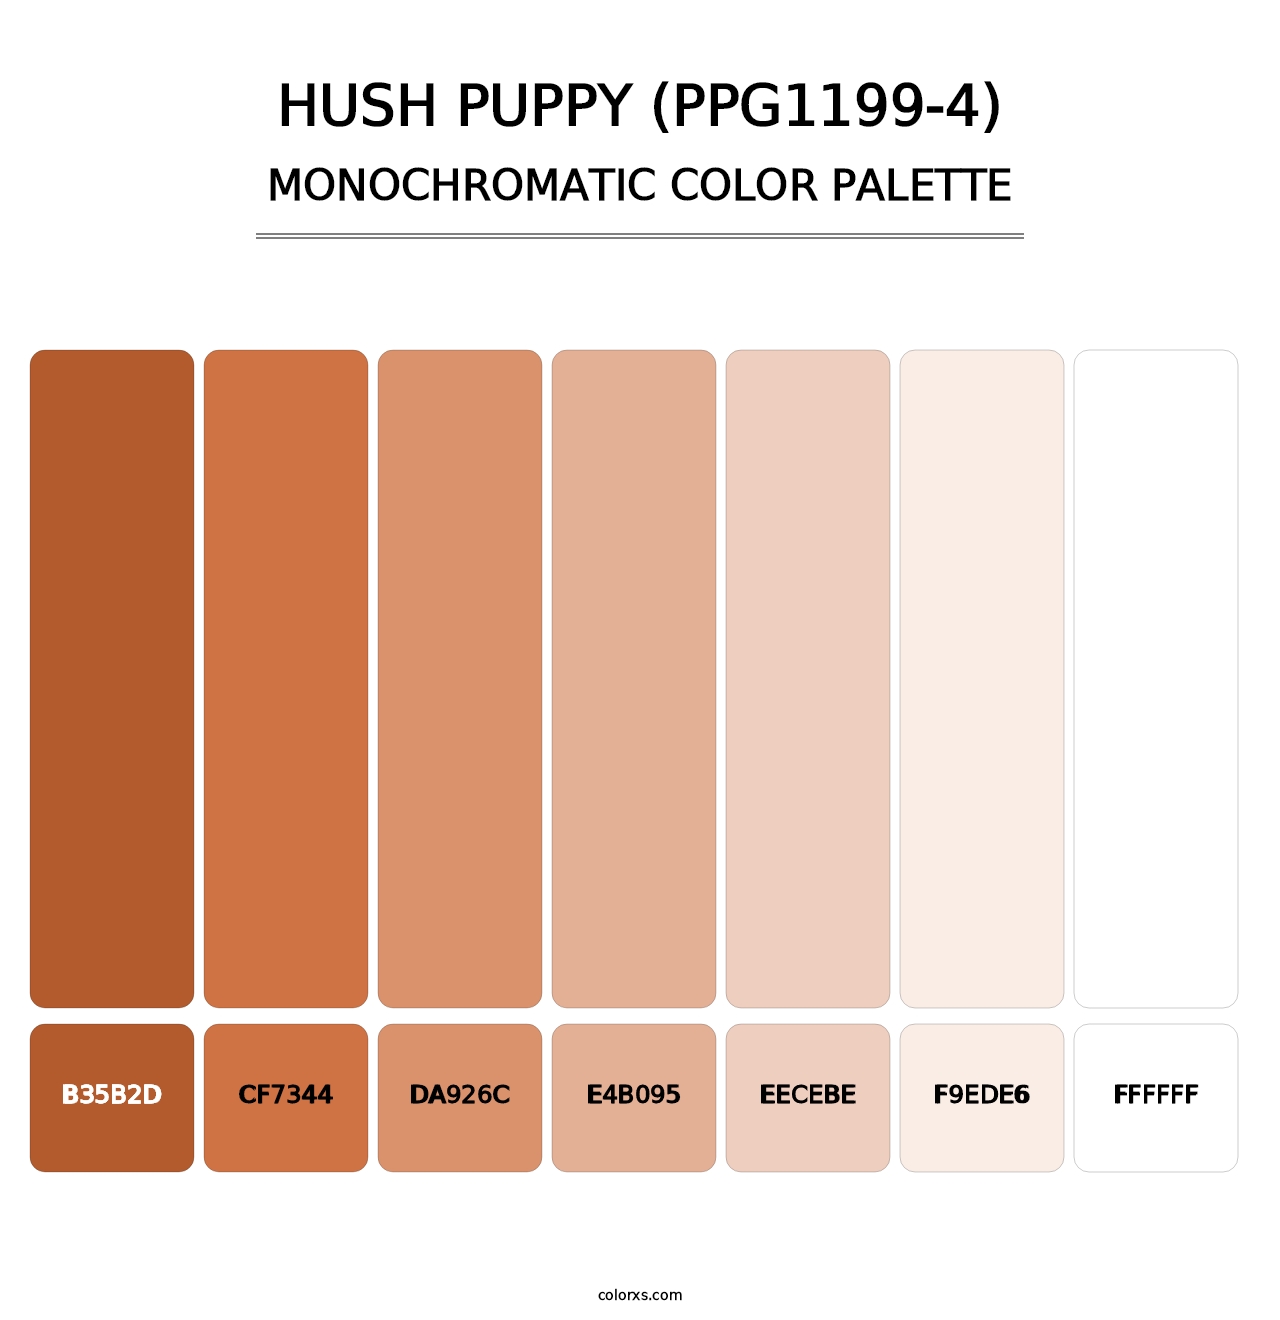 Hush Puppy (PPG1199-4) - Monochromatic Color Palette